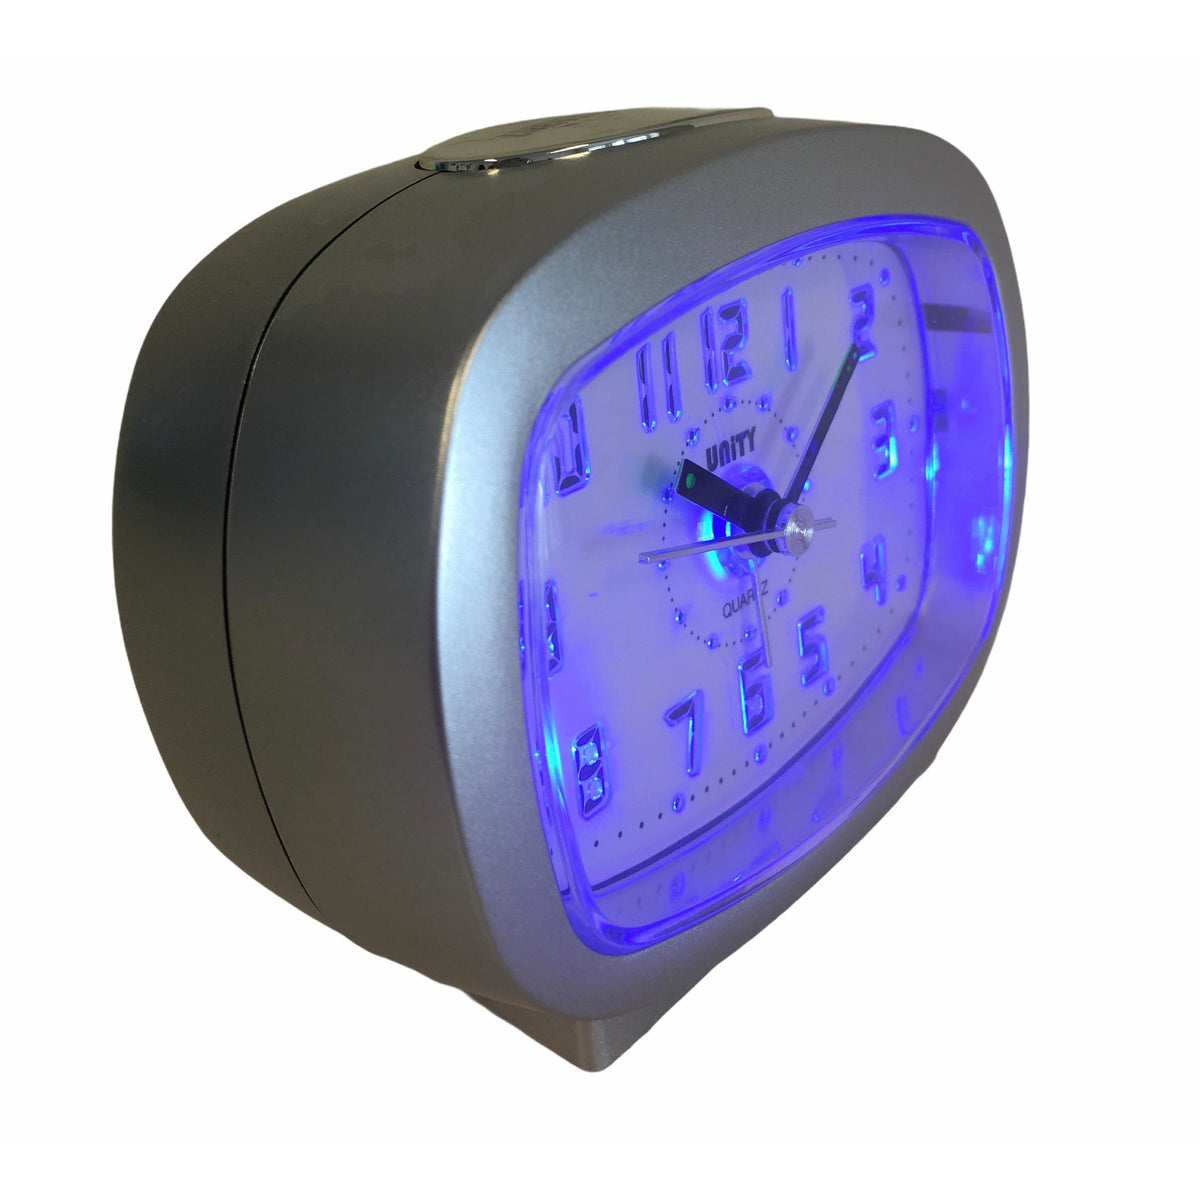 Beep Alarm Clock in Silver